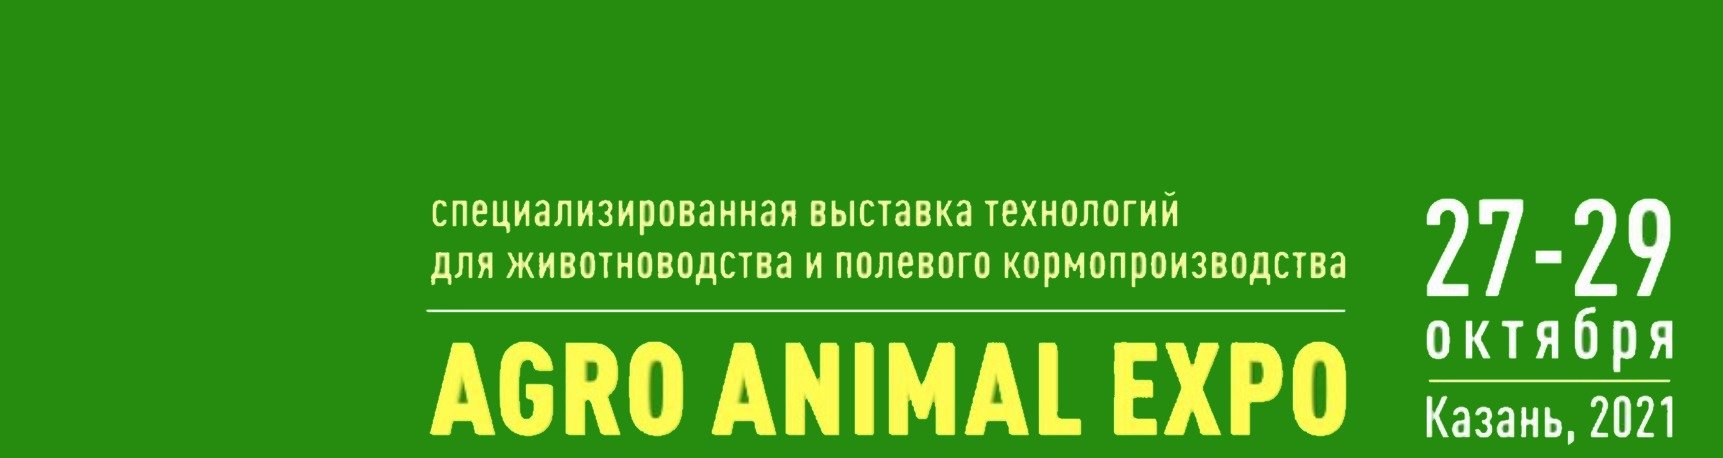 Выставка AGRO ANIMAL EXPO